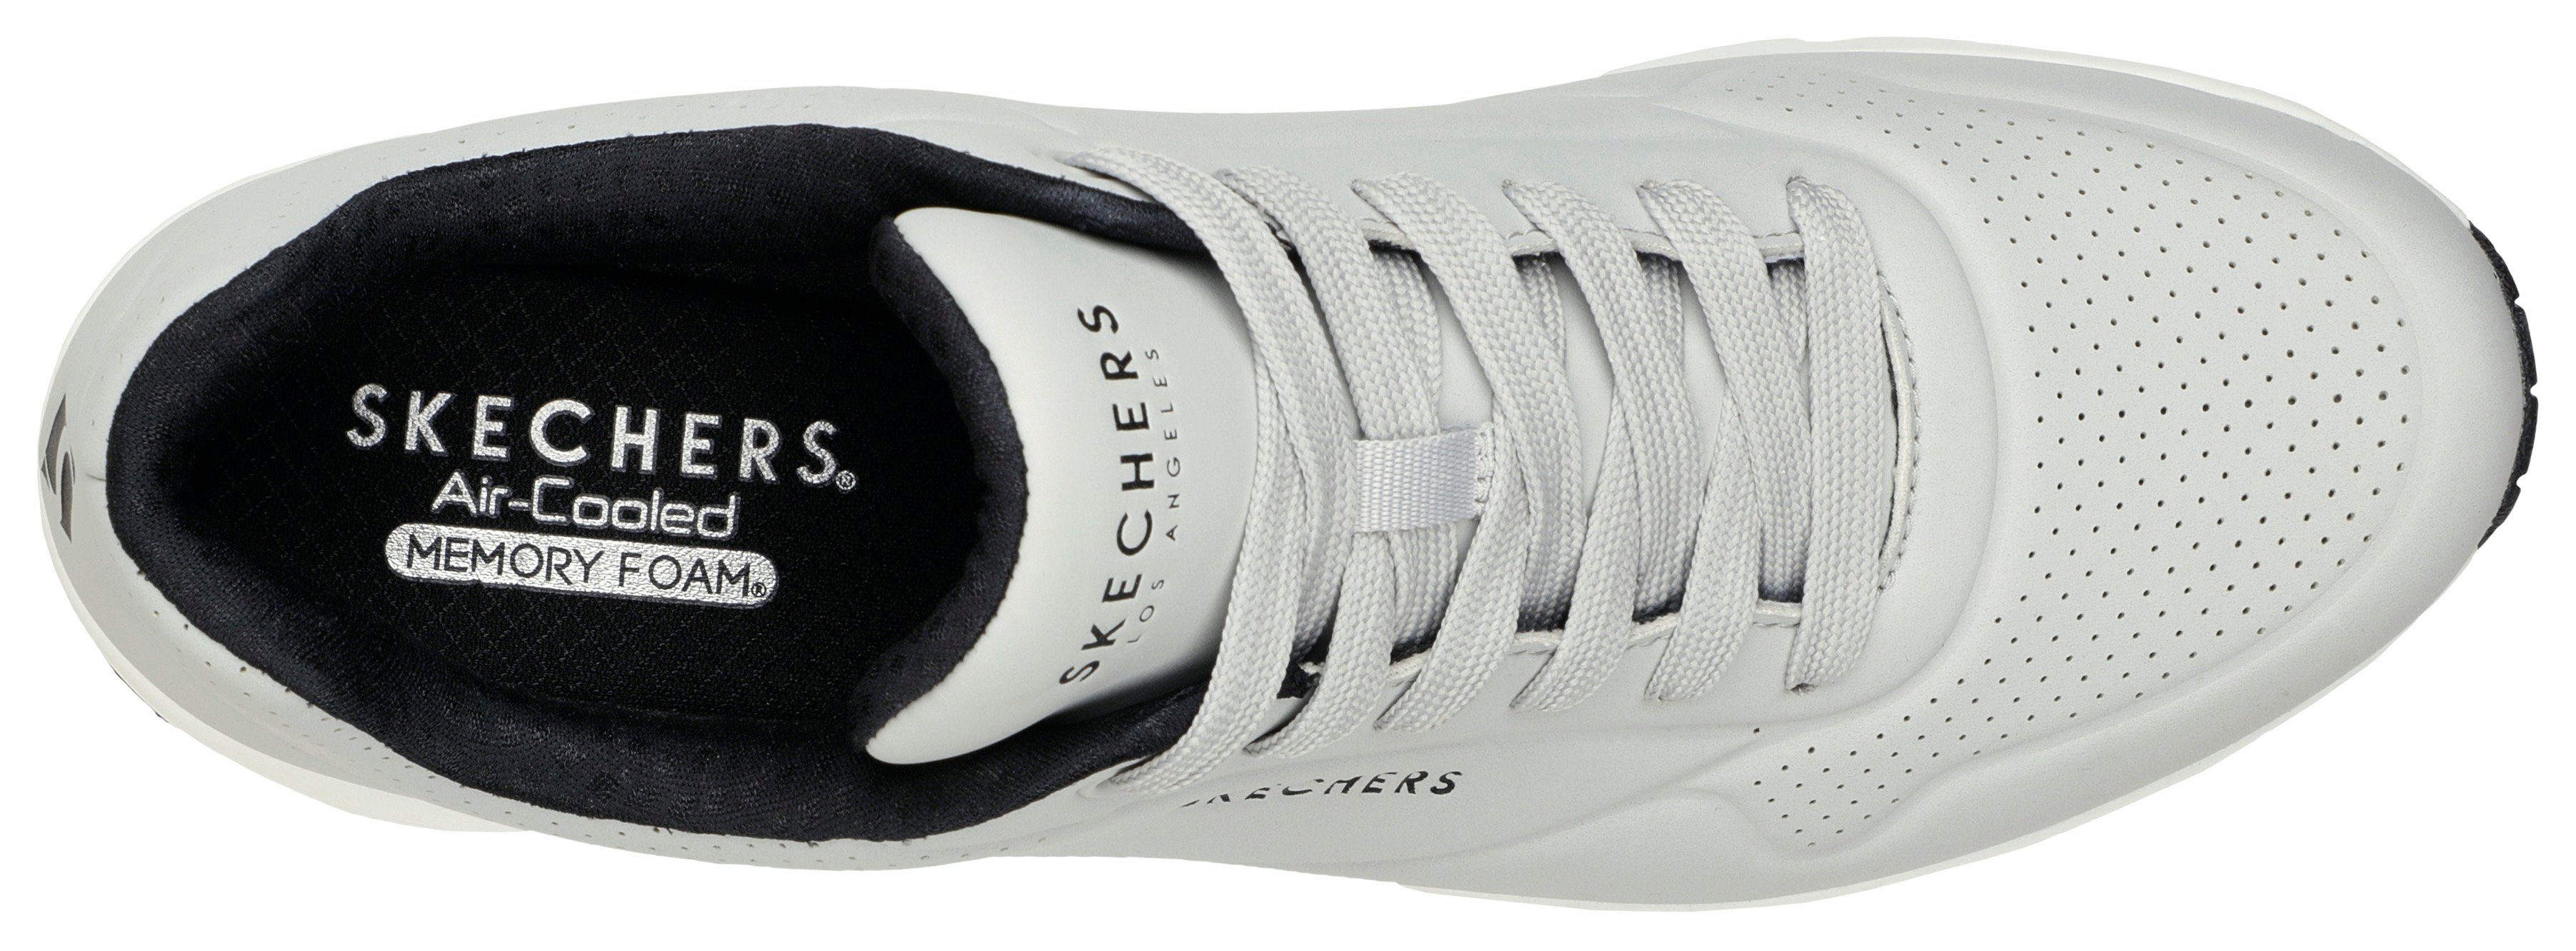 Skechers Air-Cooled hellgrau-schwarz Uno Memory Foam Sneaker mit